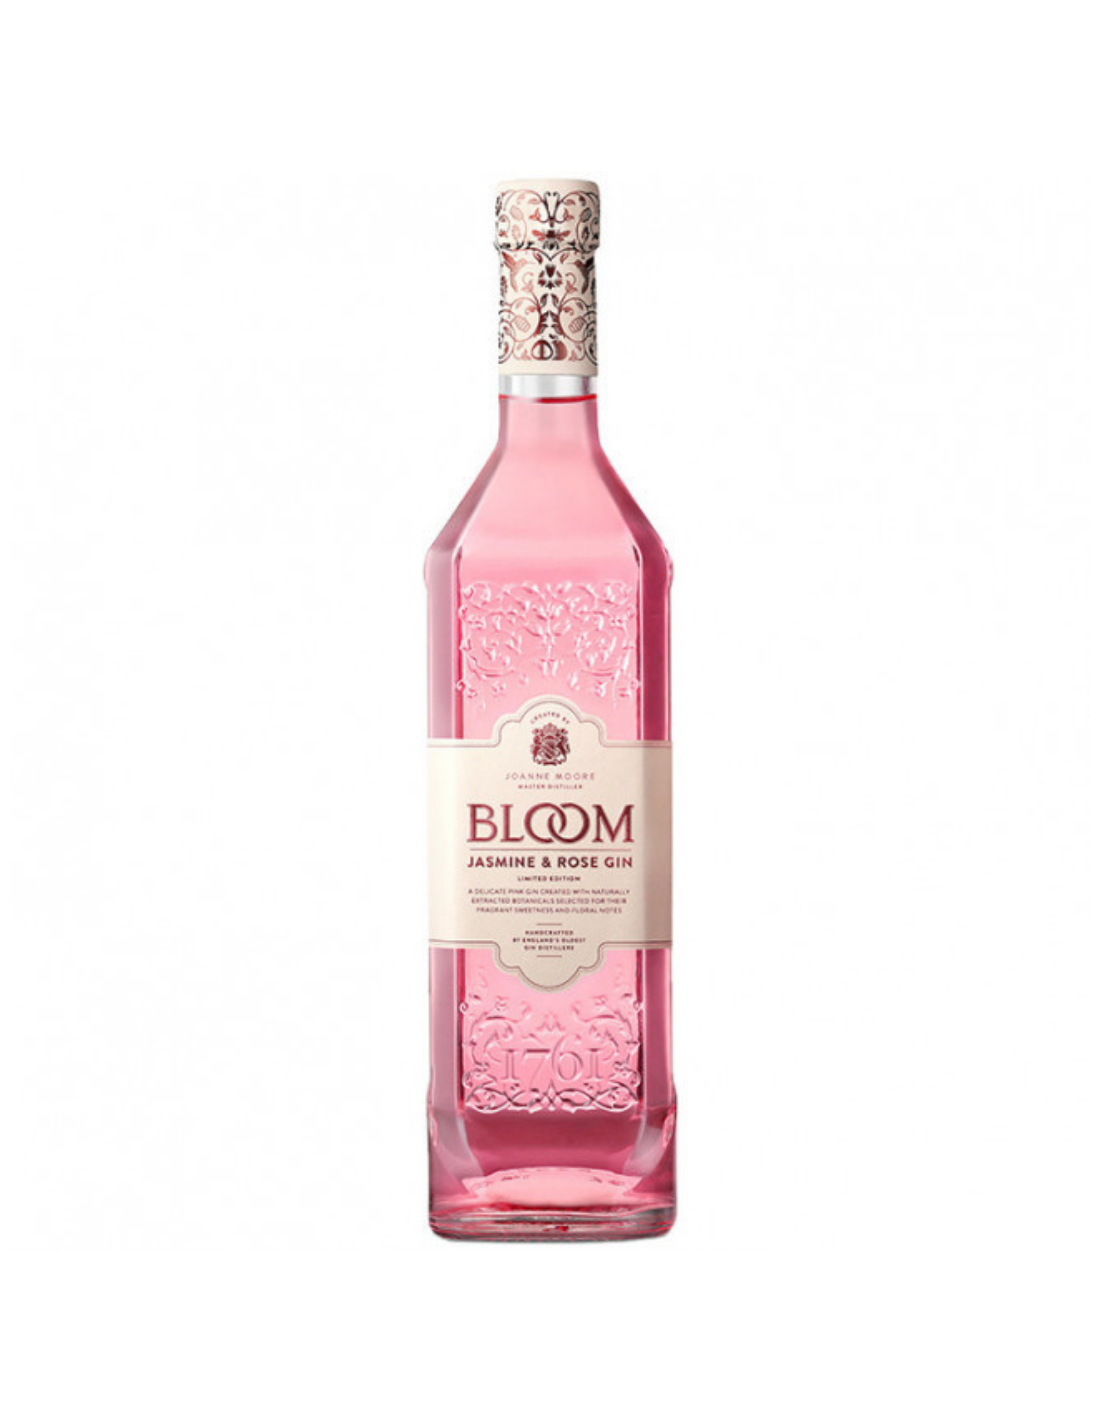 Gin Bloom Jasmine & Rose, 40% alc., 0.7L, Anglia alcooldiscount.ro